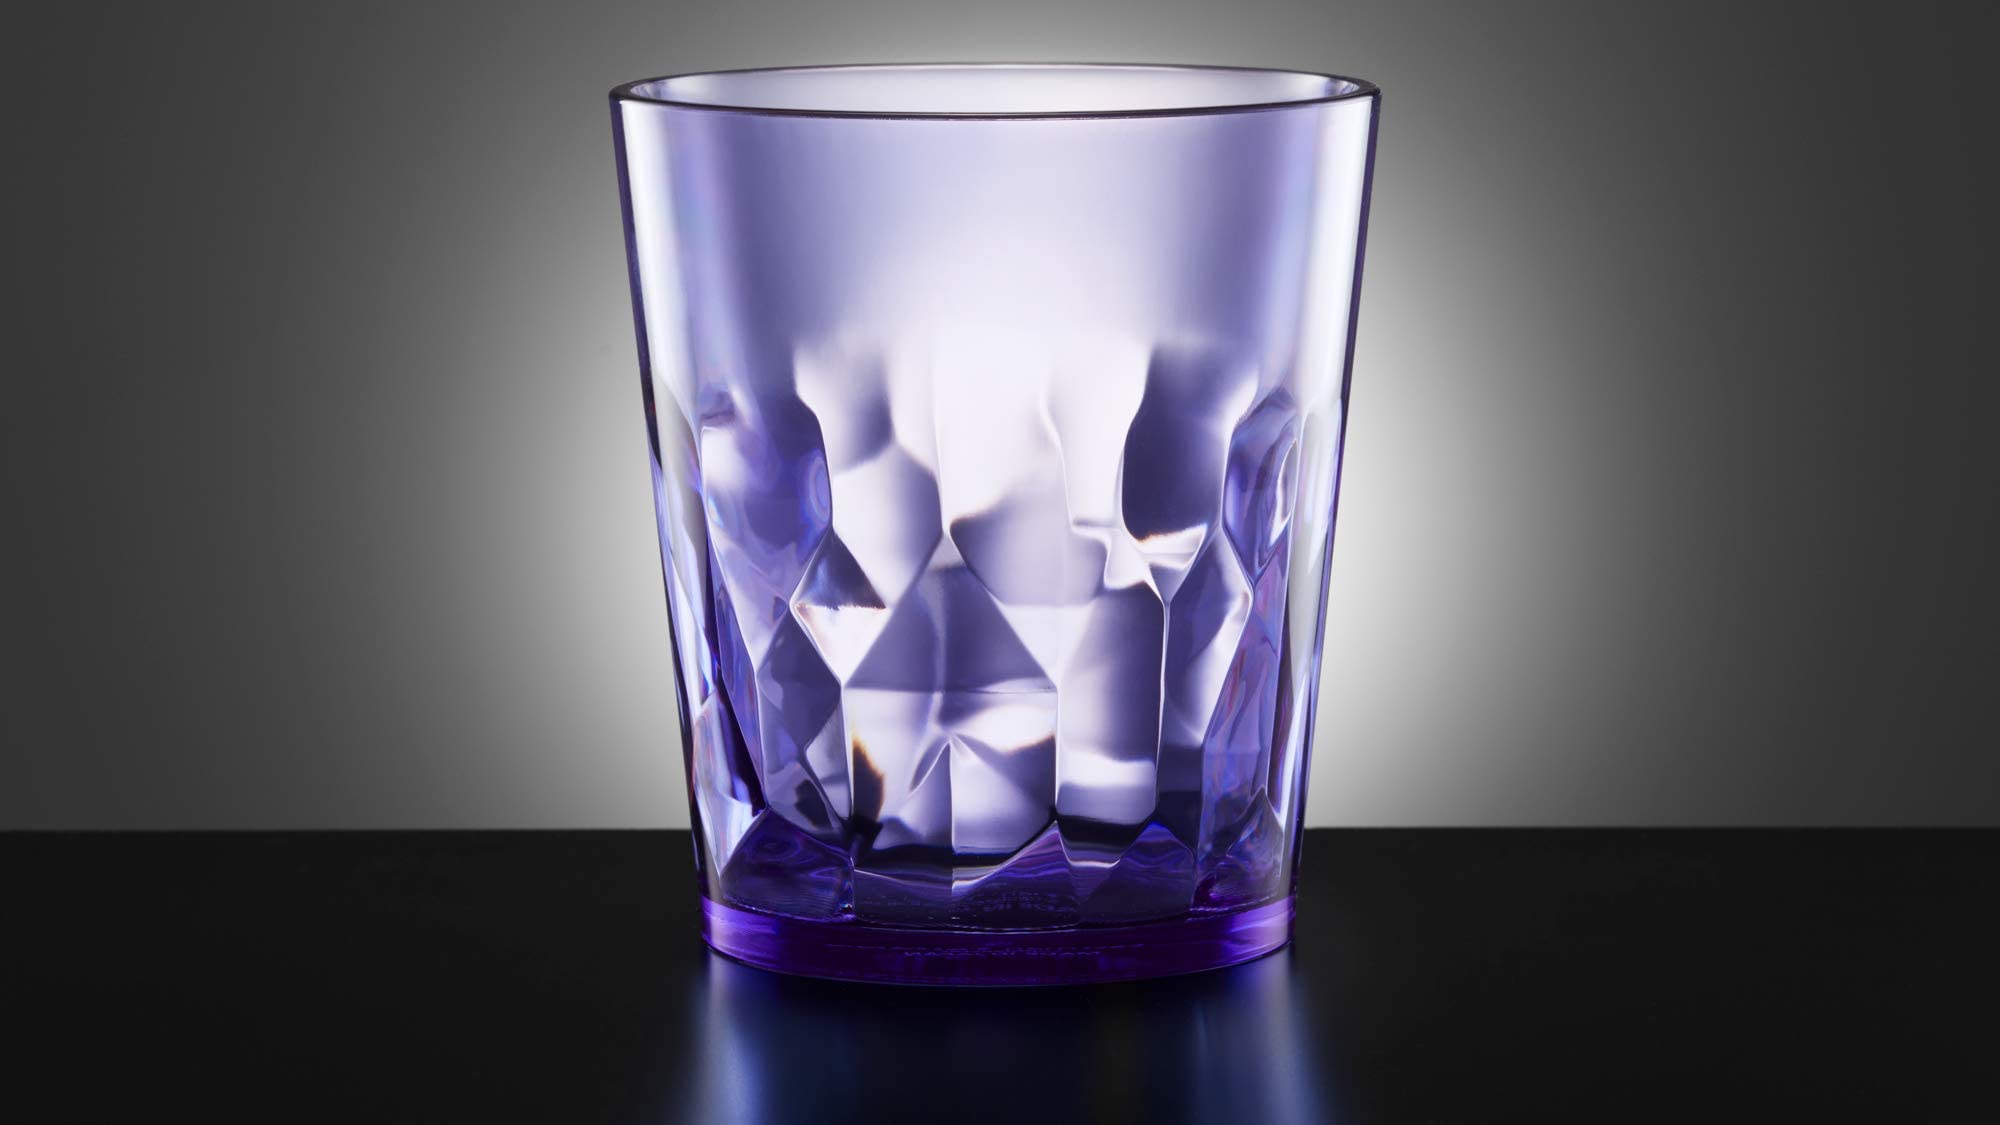 SCANDINOVIA - 13 oz Unbreakable Premium Drinking Glasses - Set of 6 - Tritan Plastic Tumbler Cups Reusable - Perfect for Gifts -